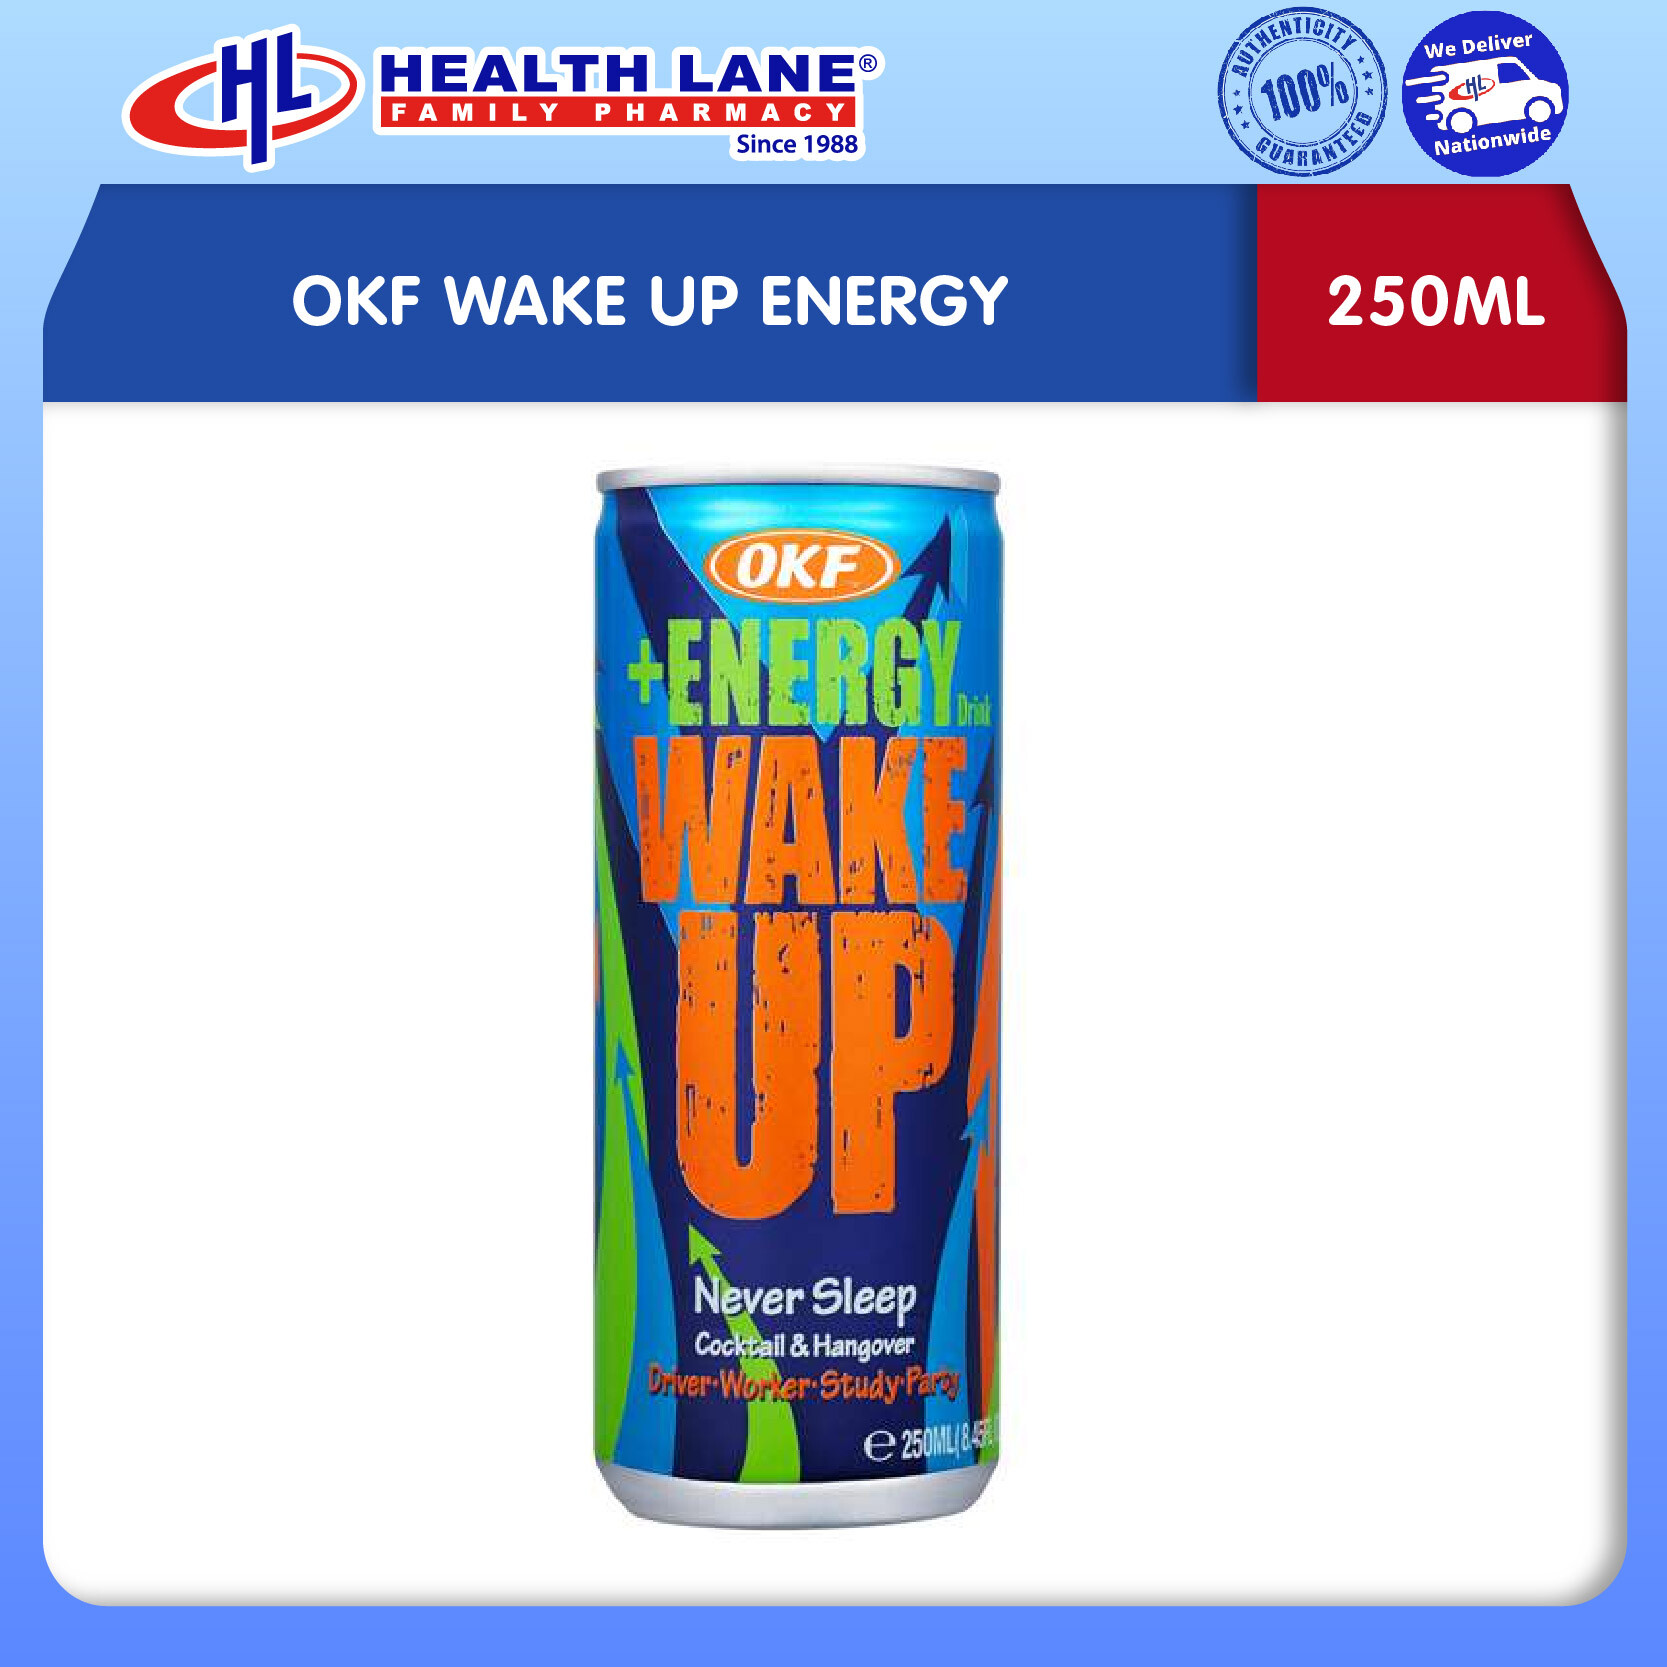 OKF WAKE UP ENERGY (250ML)